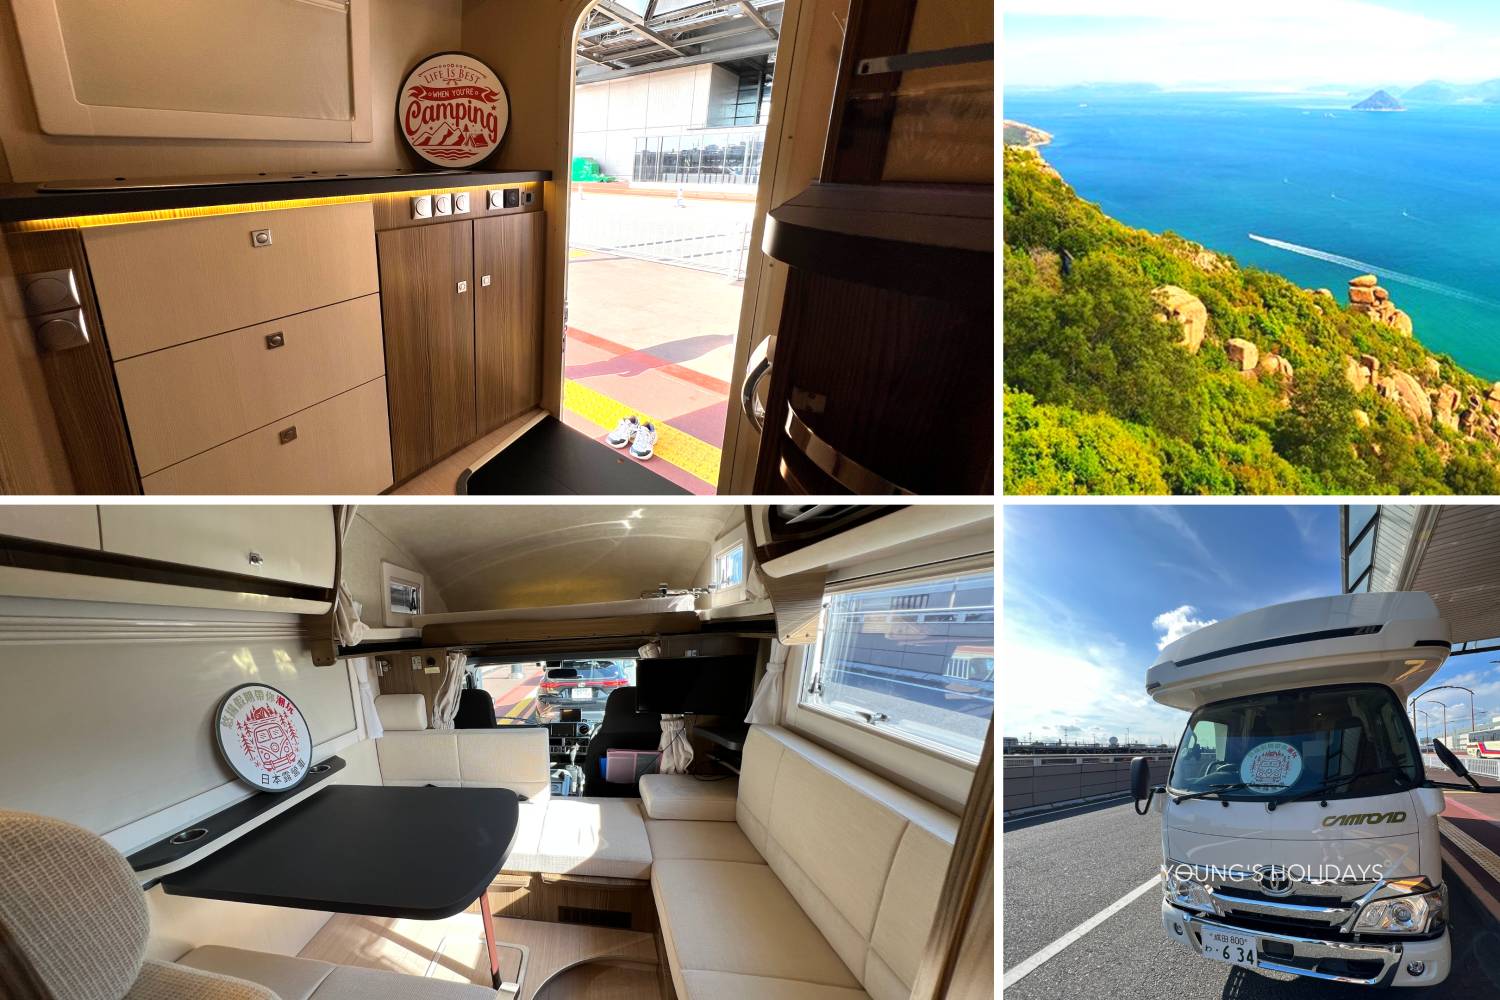 Young's Holidays 【Tokyo】Japan 5ppl RV Caravan 24 hours Rental Experience 5